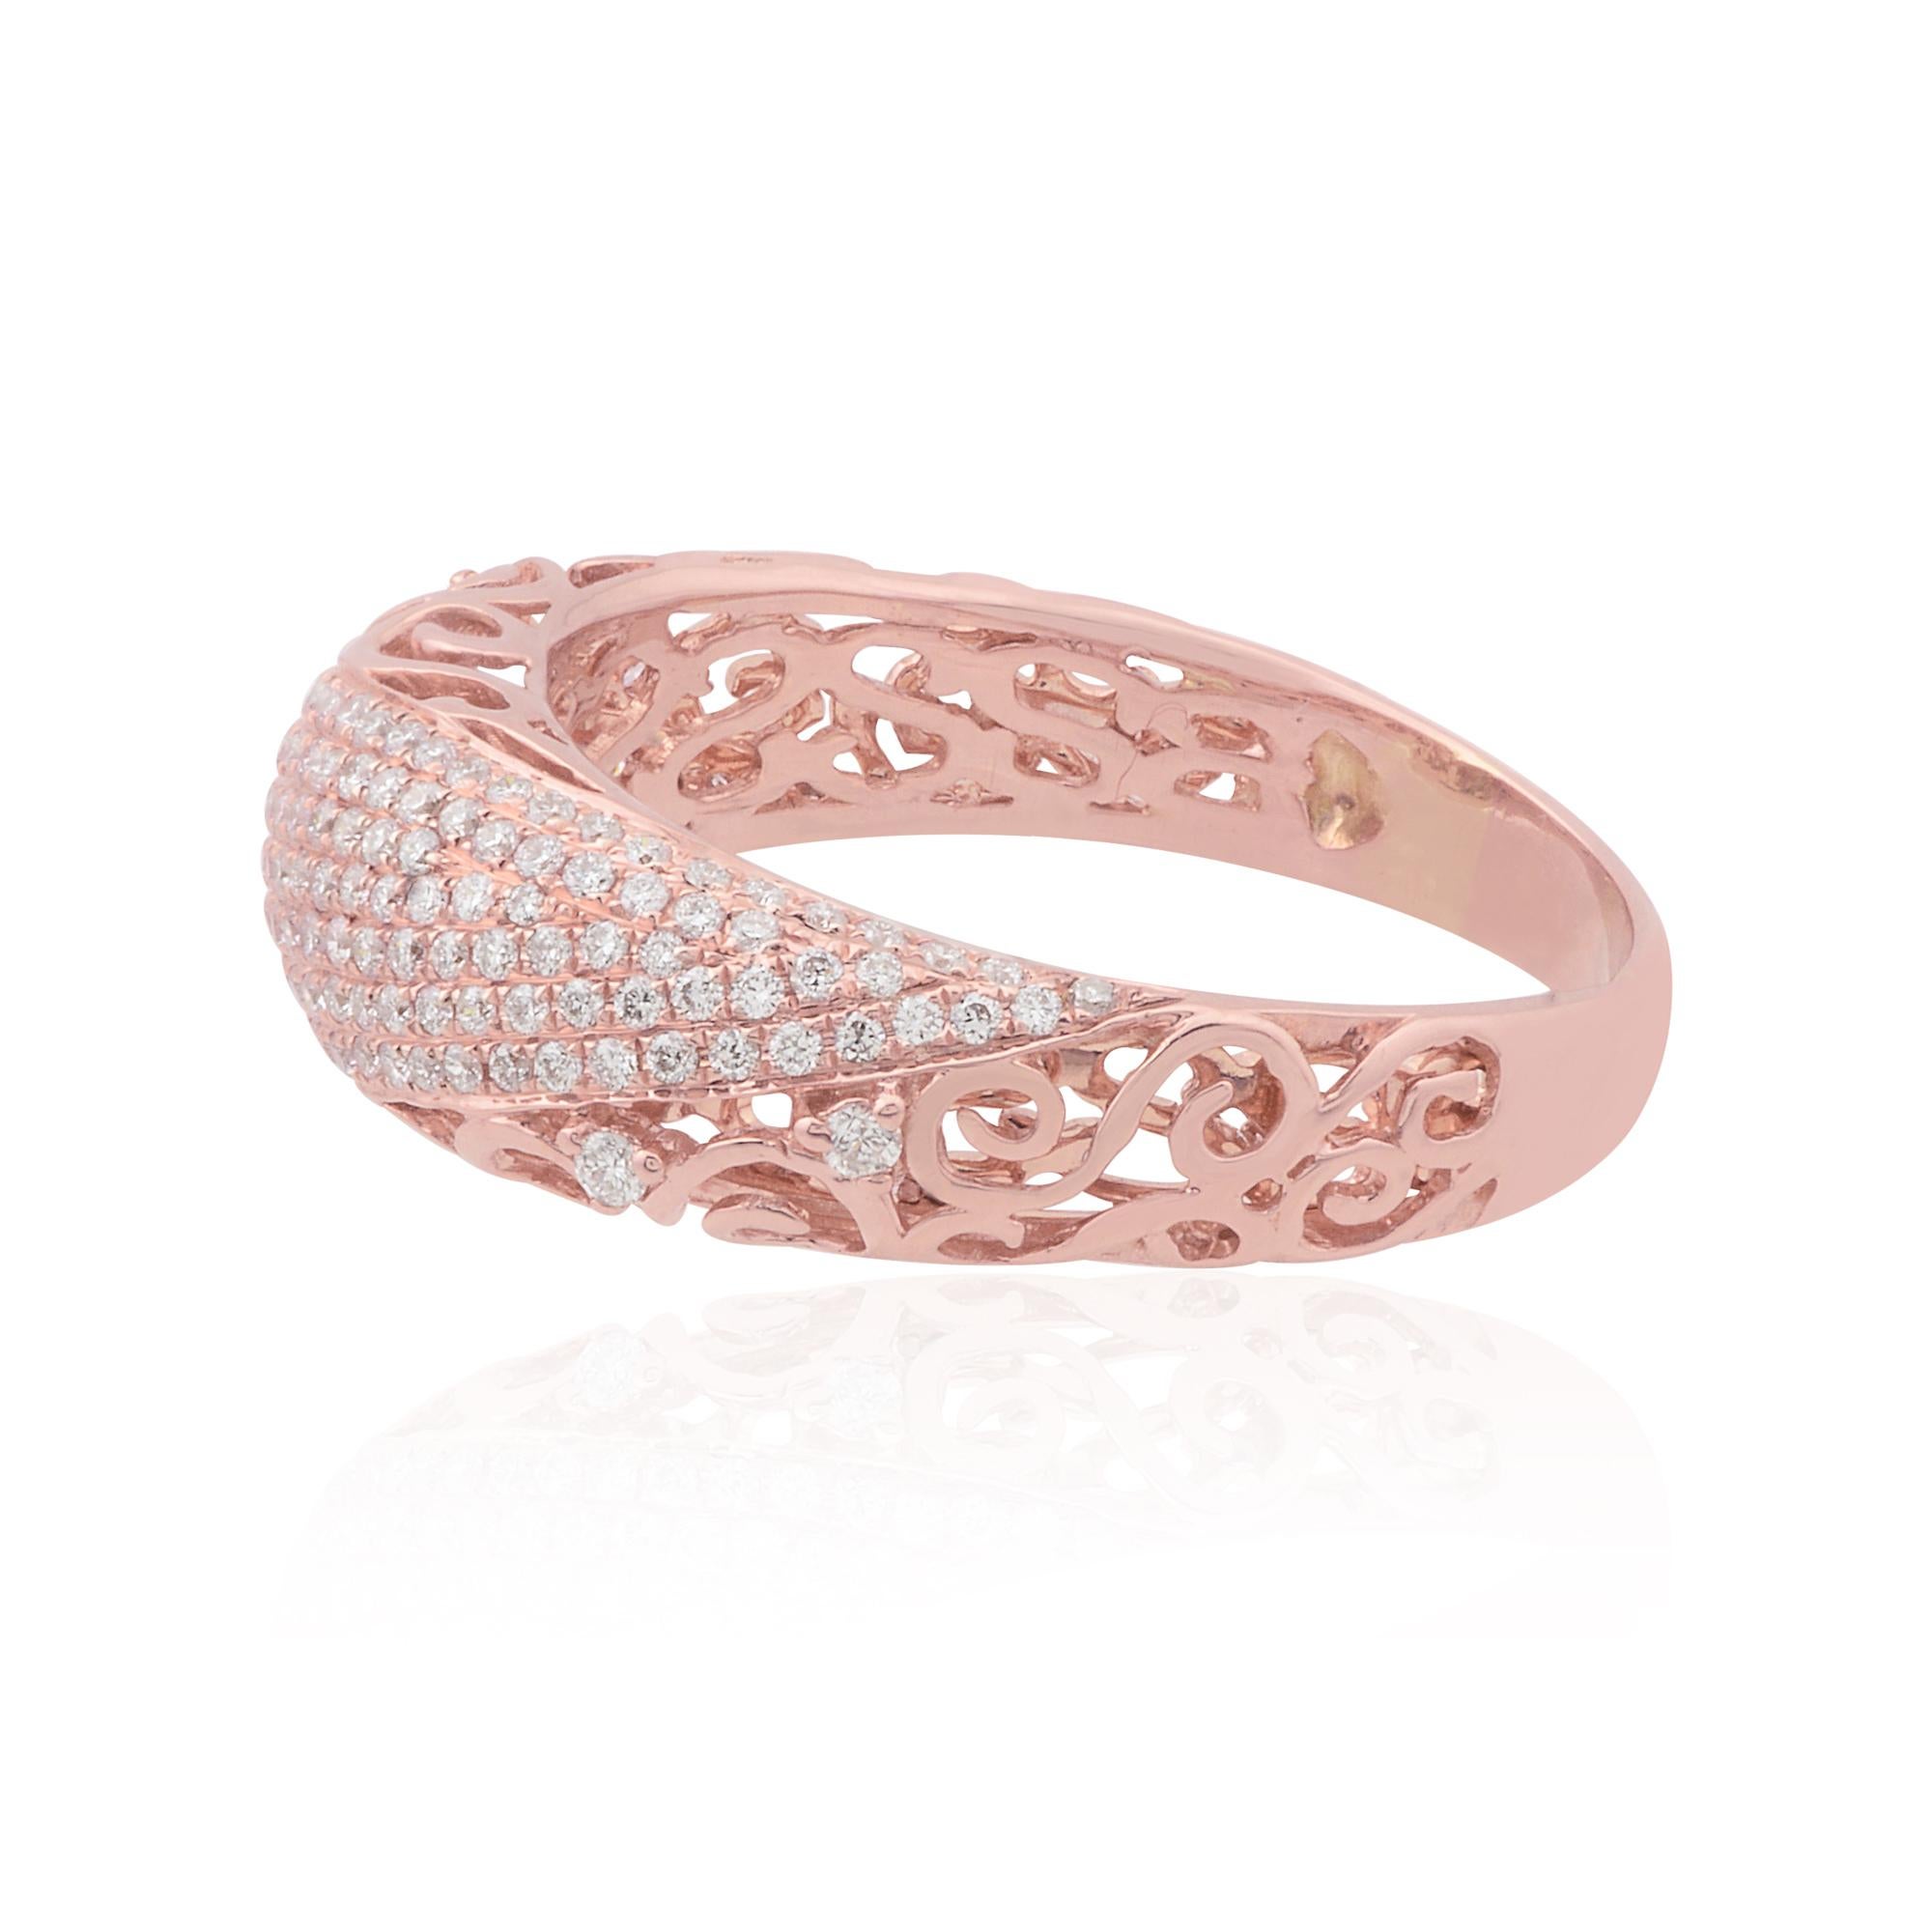 For Sale:  0.70 Carat Diamond Pave Filigree Design Ring Solid 18k Rose Gold Fine Jewelry 5